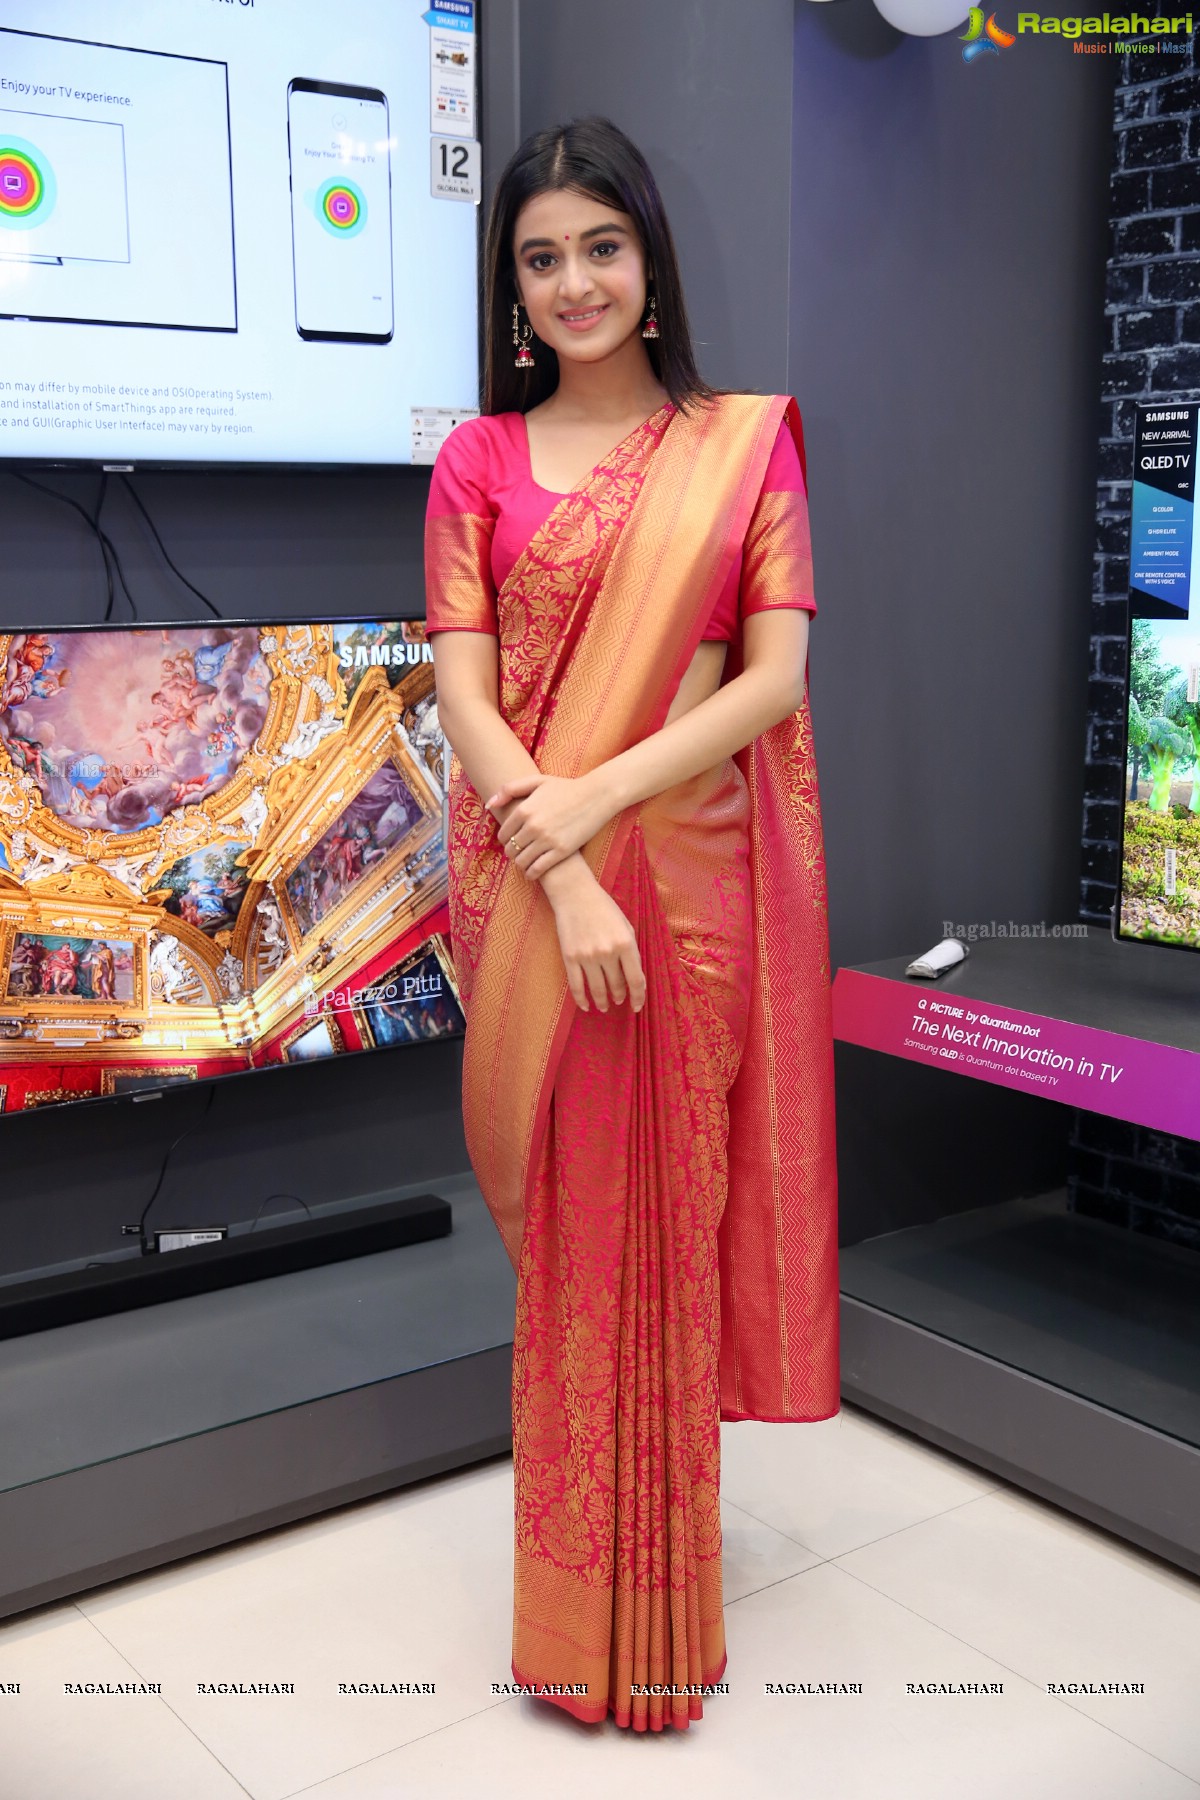 Bajaj Electronics Gold Hungama '1KG Gold Prize' at Forum Sujana Mall